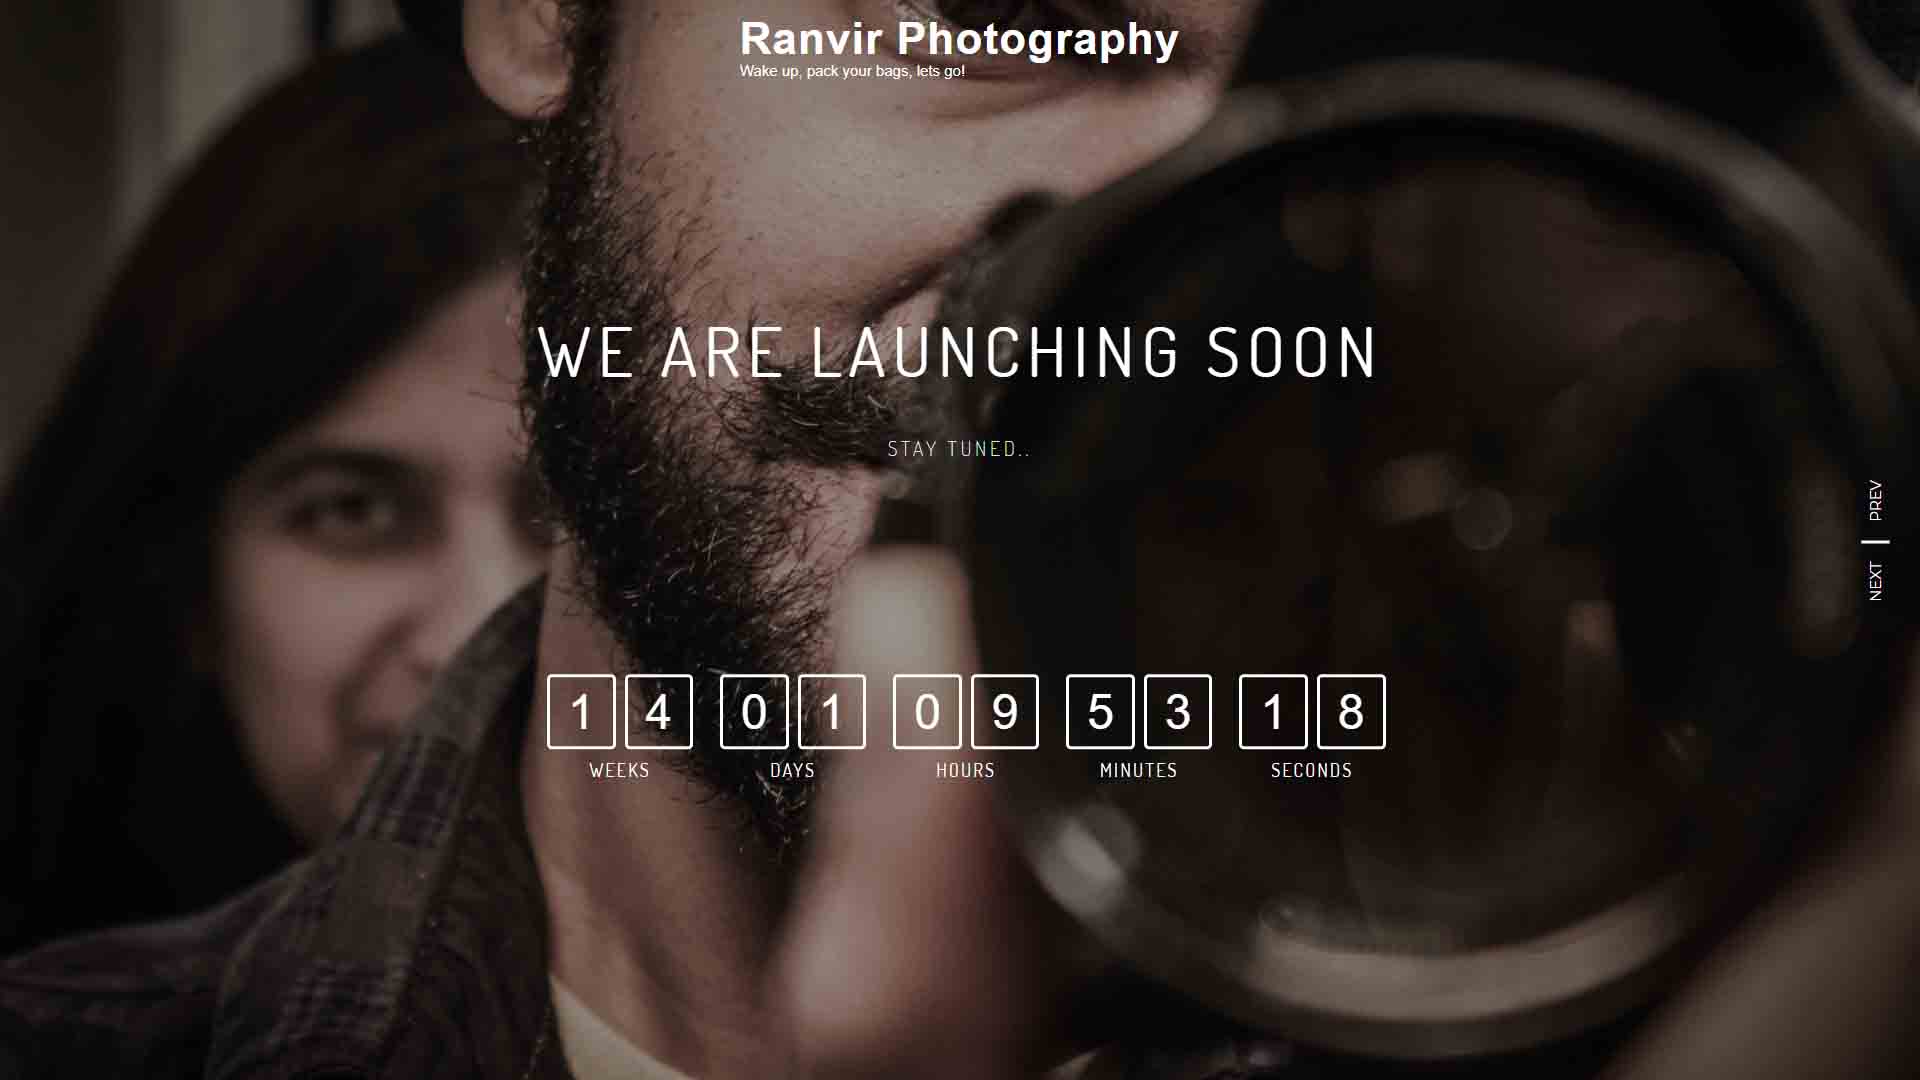 Ranvir Photography website